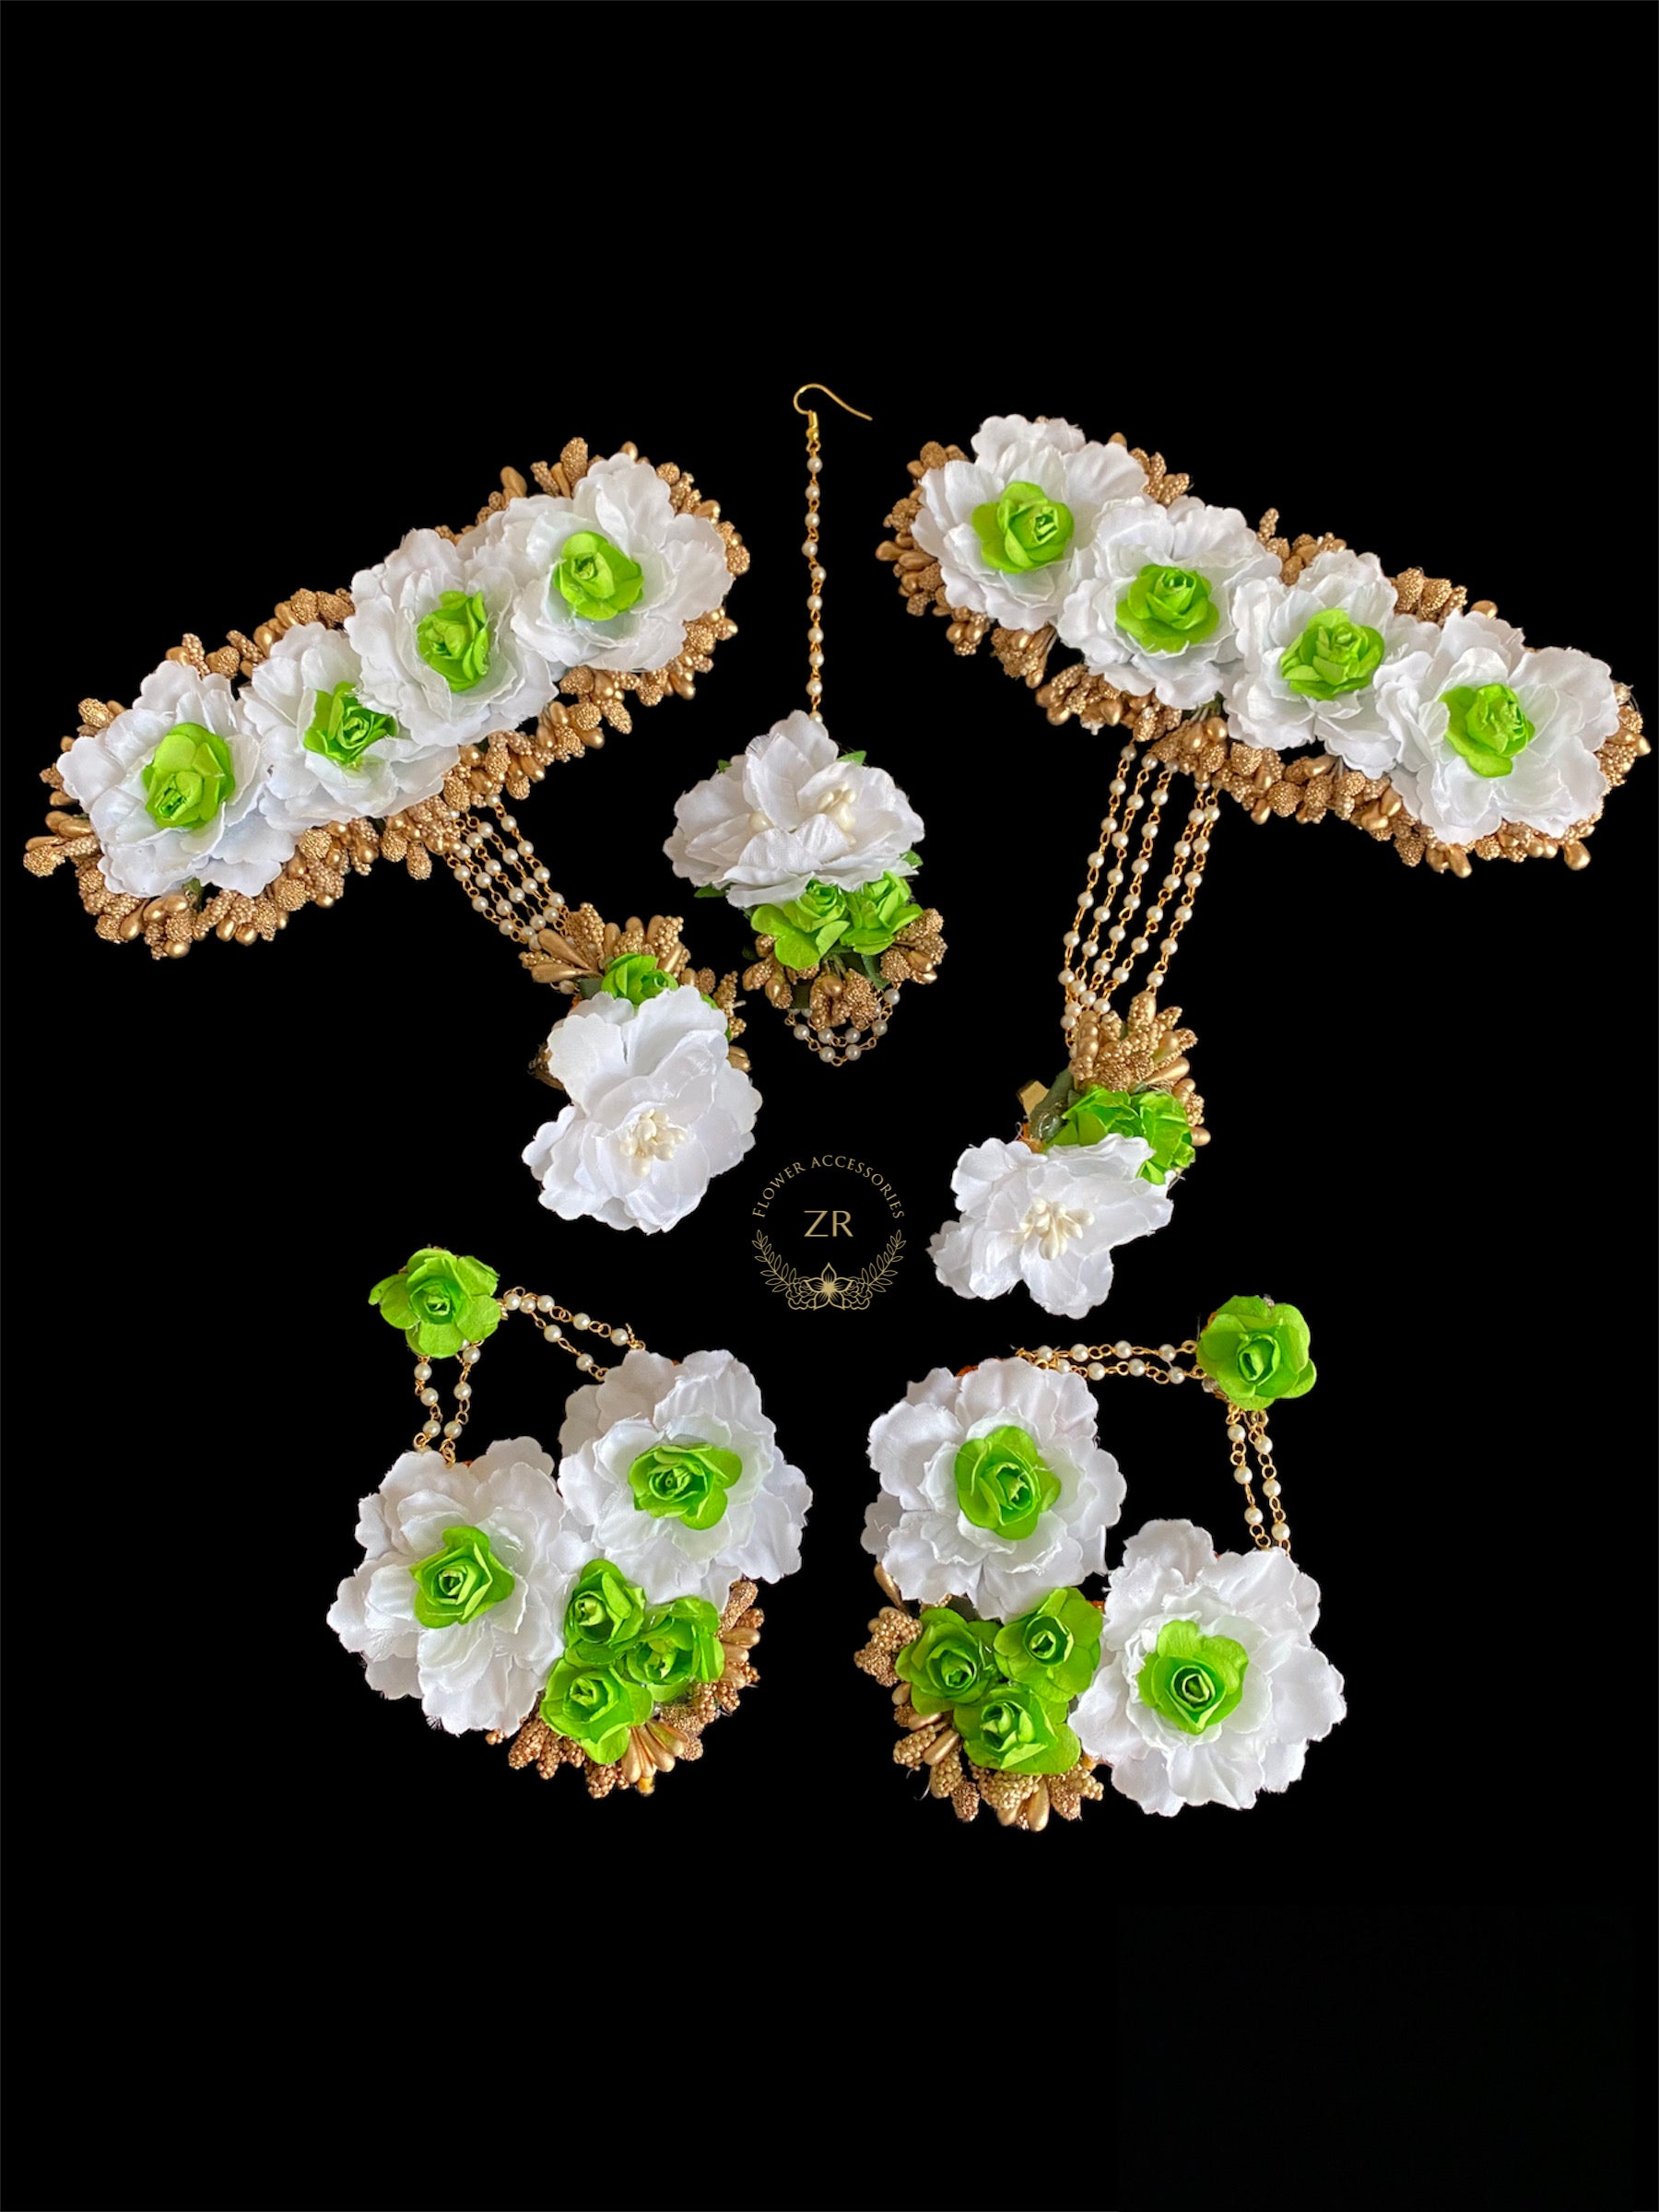 Bride Wrist Flower Bracelet Groom Fake Silk Rose Corsage Pin Wedding  Bouquet | eBay